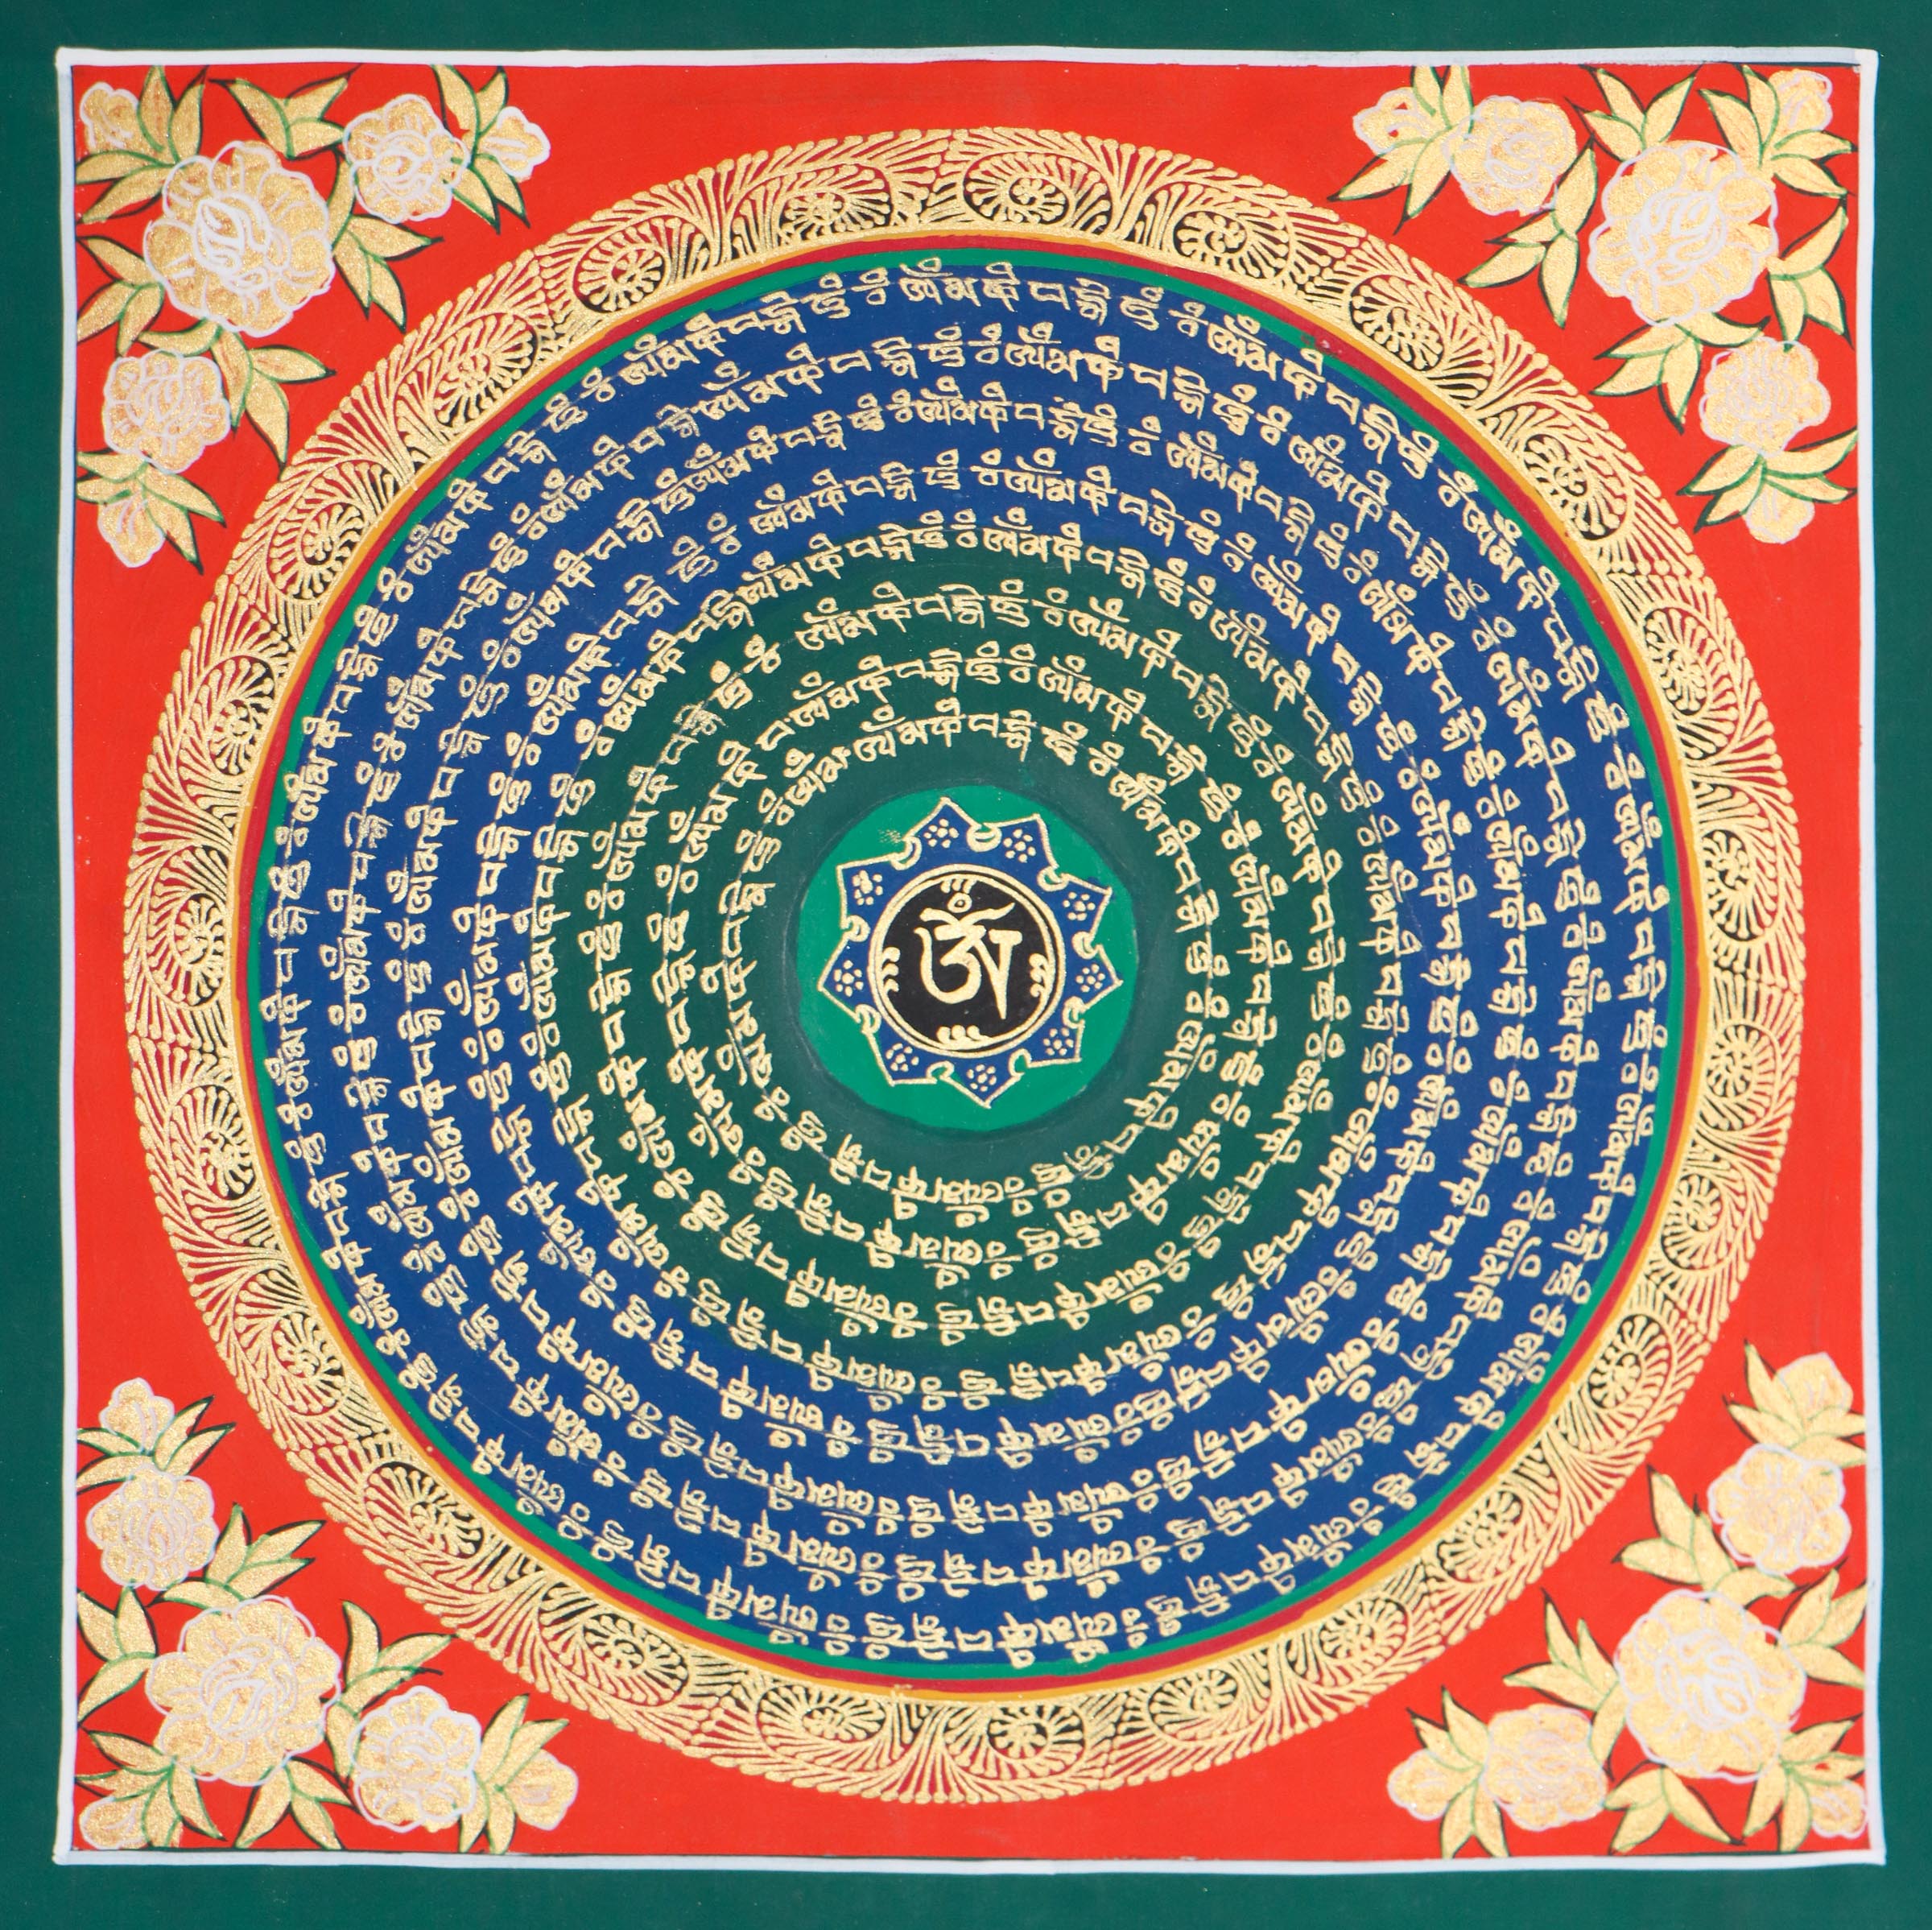  Mantra Mandala Thangka helps encourage spiritual growth, and provide guidance and protection.